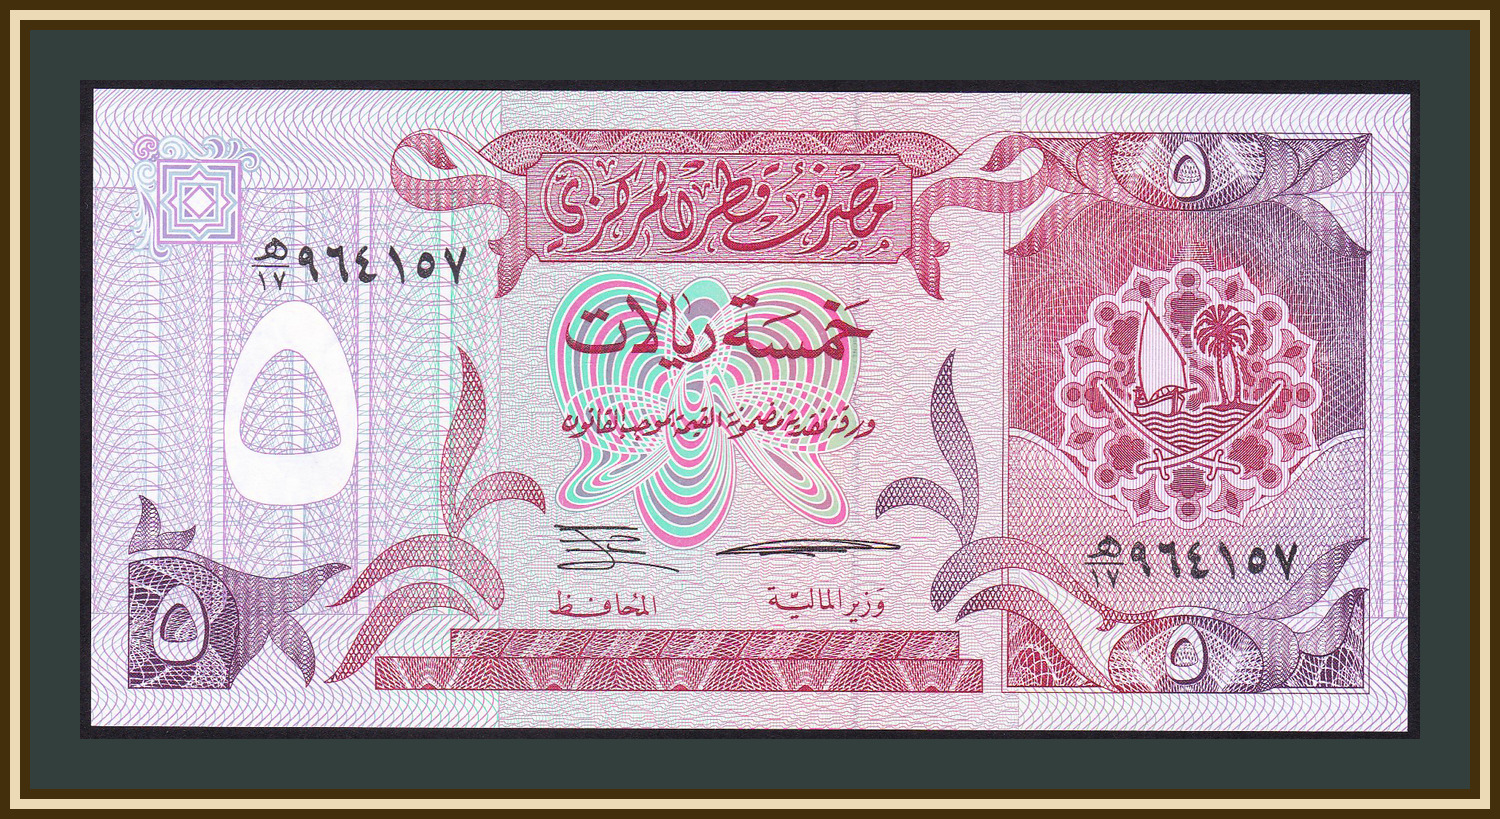 Катарский риал банкноты. Купюры Катара. Денежная единица Катара. Валюта Катара купюры.